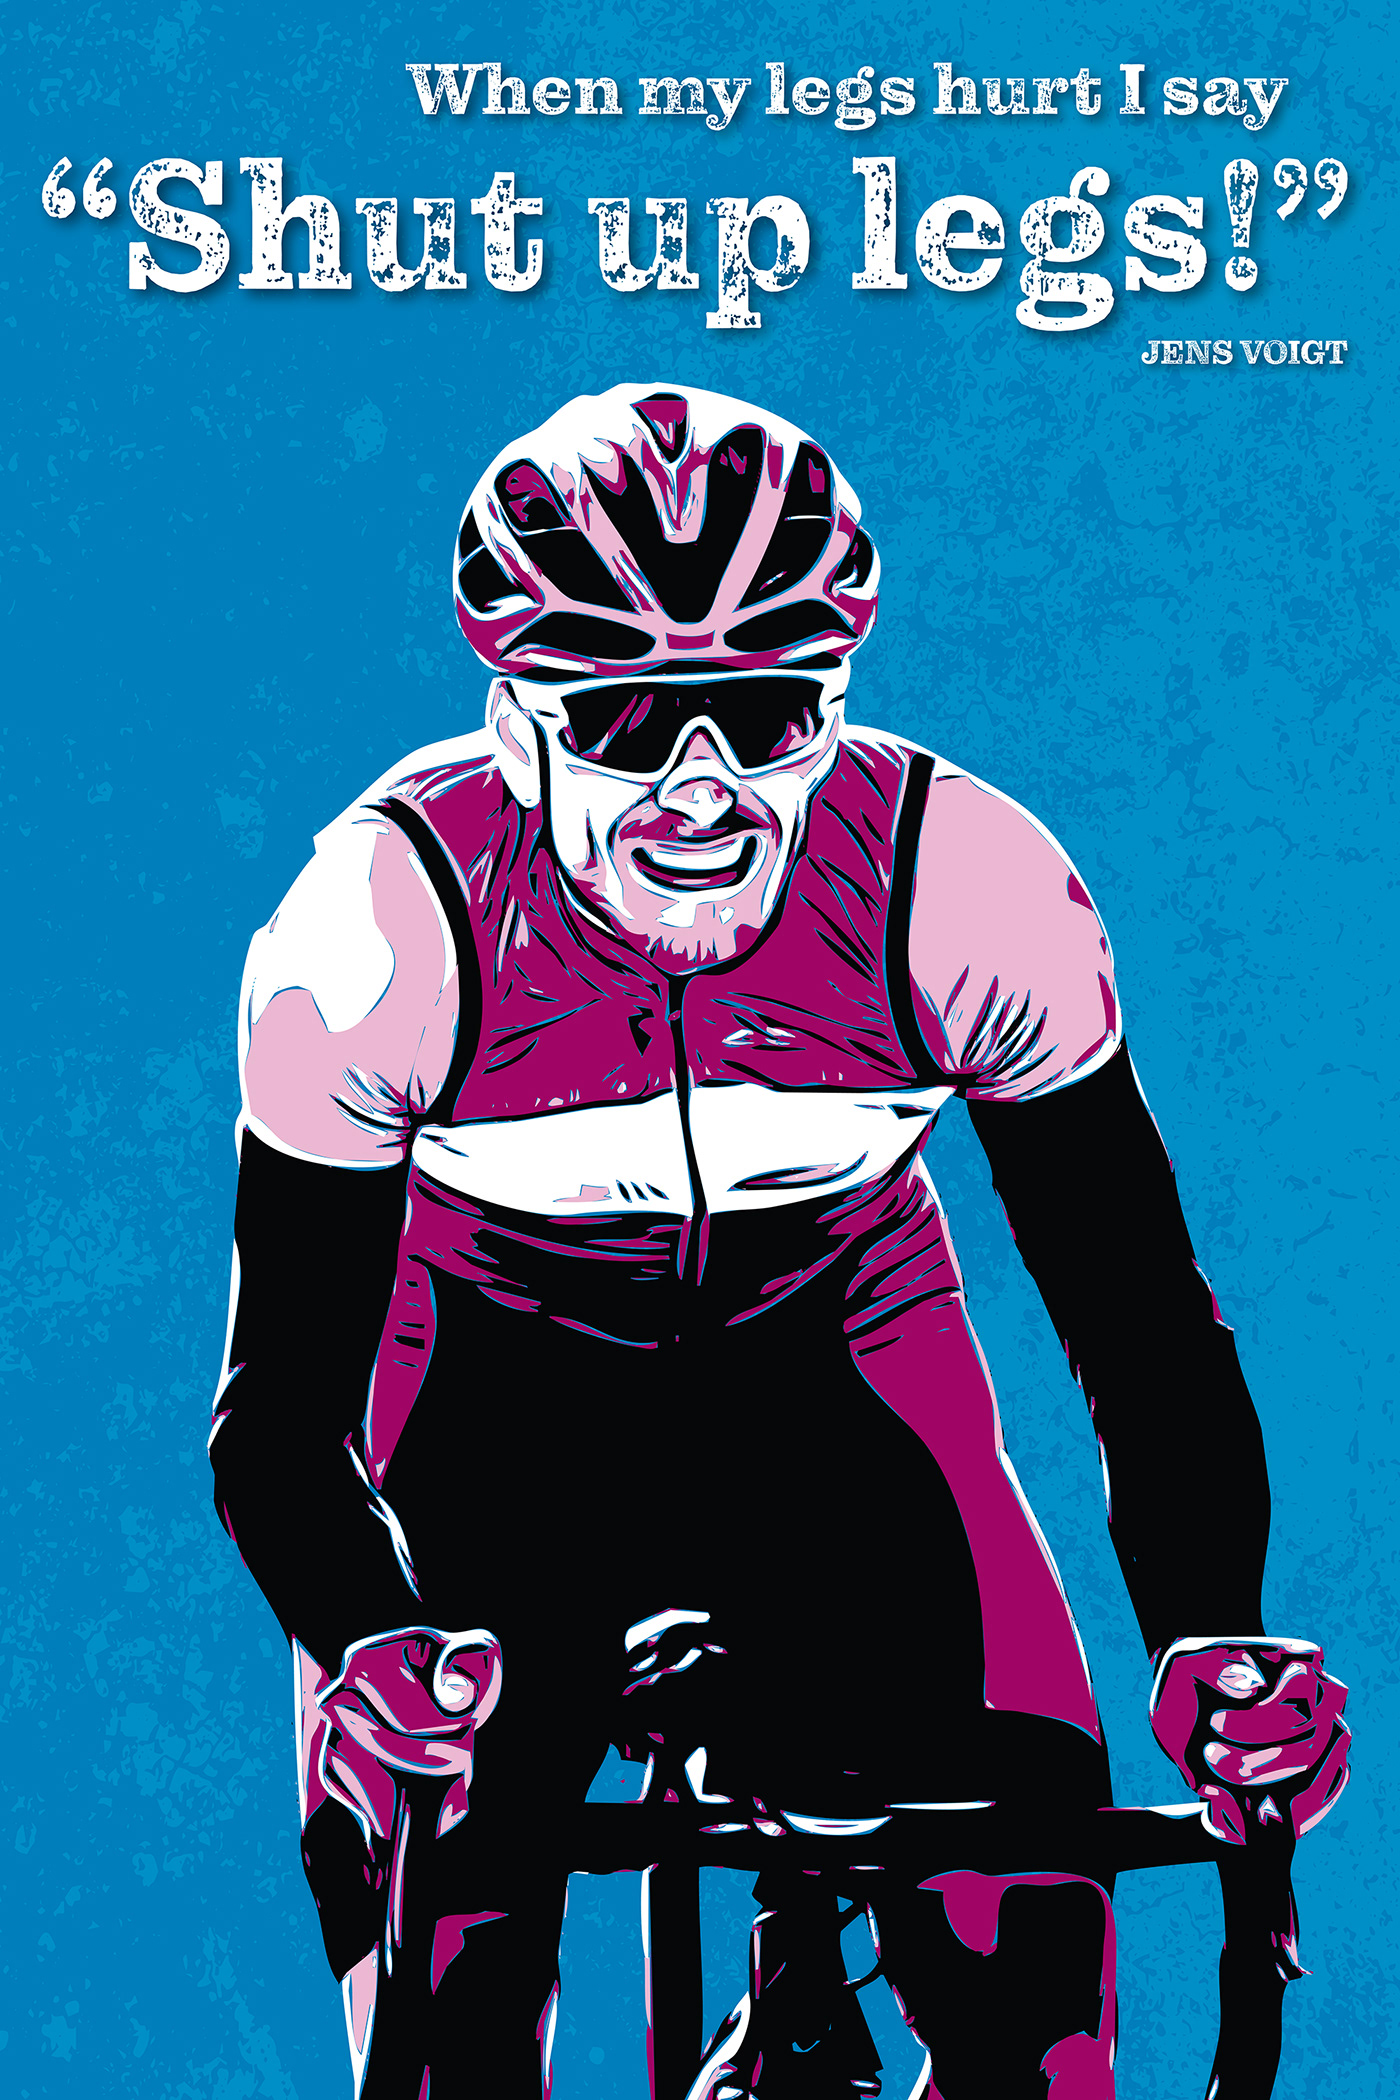 poster Cycling cyclist inspiration designer graphics adobe illustrator digital illustration vector artwork